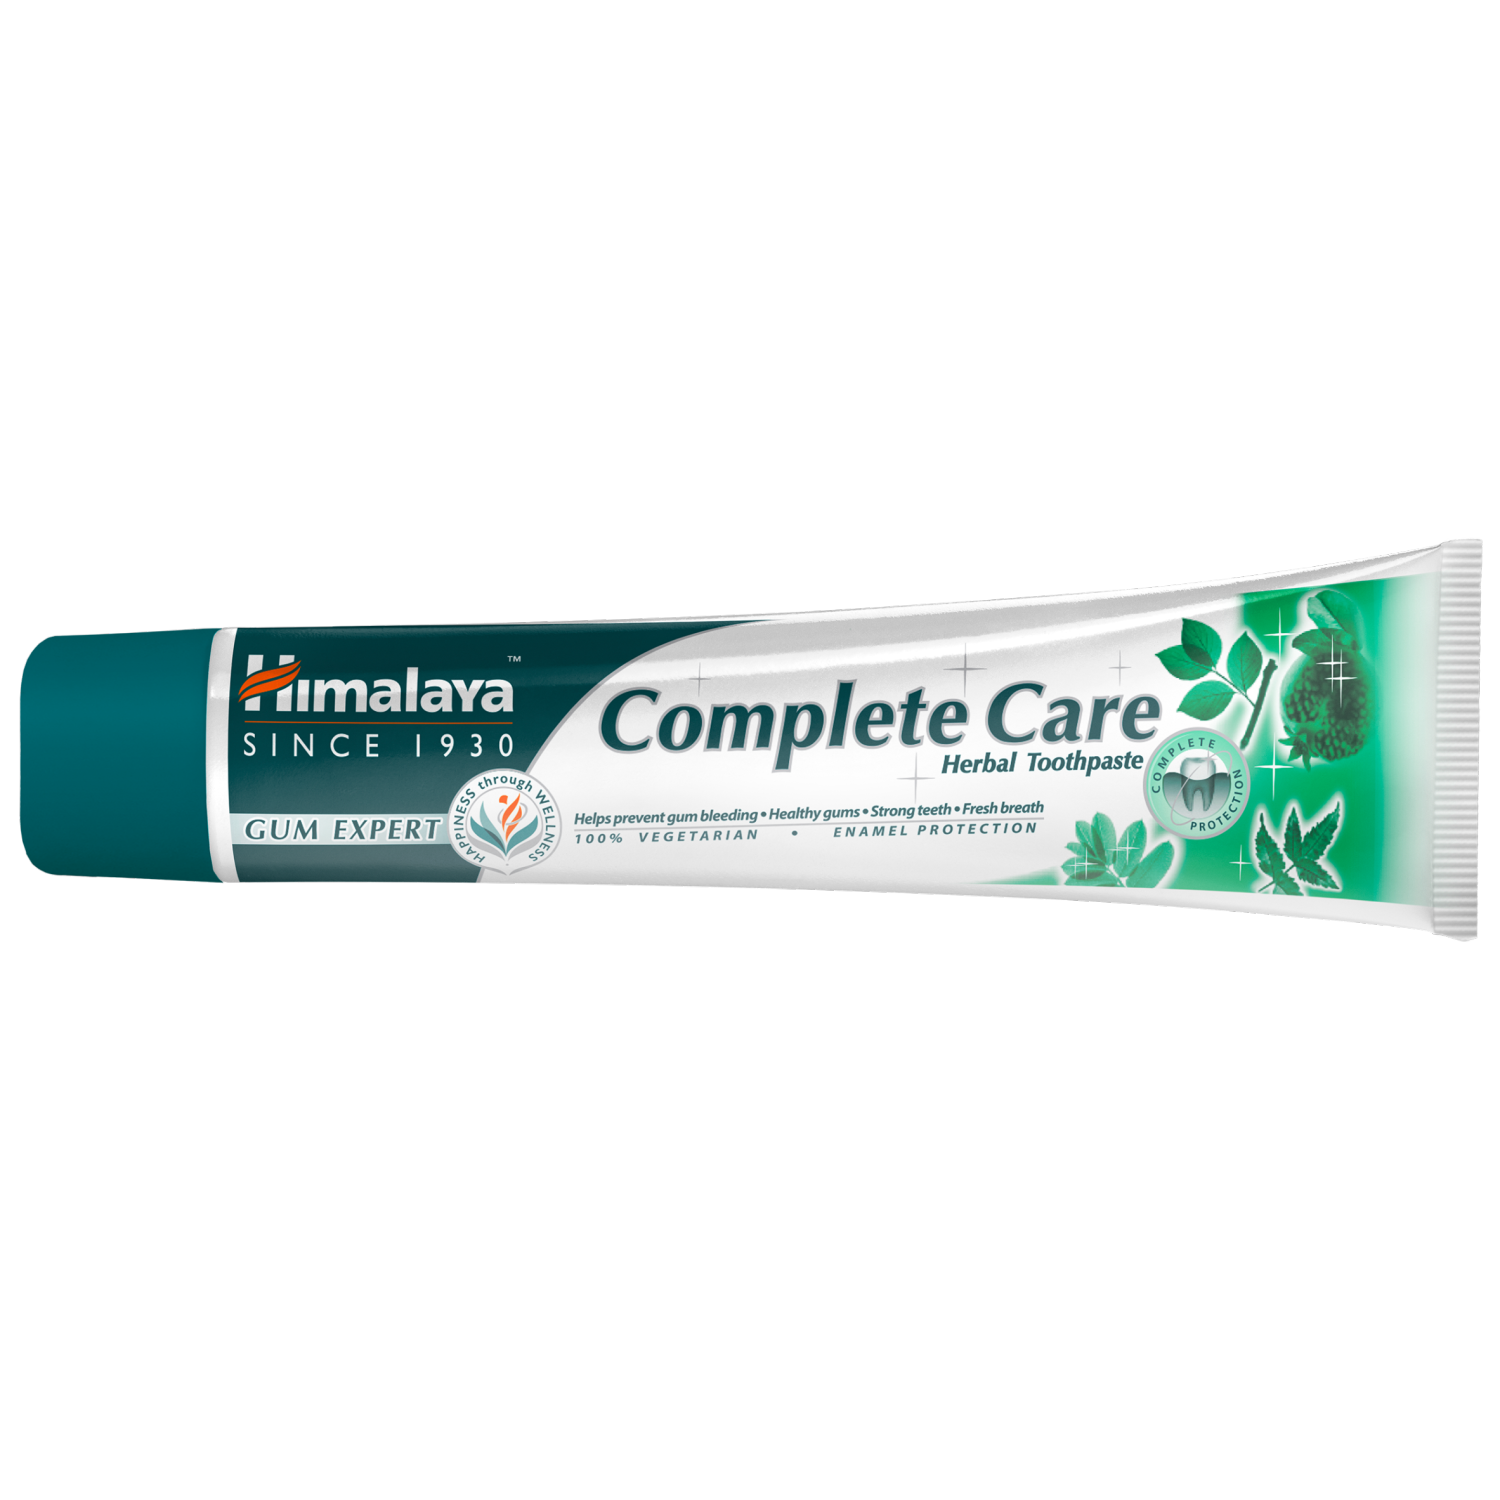 Himalaya Herbals Complete Care зубная паста, 75 мл зубная паста herbals mint fresh gum expert 75 мл himalaya